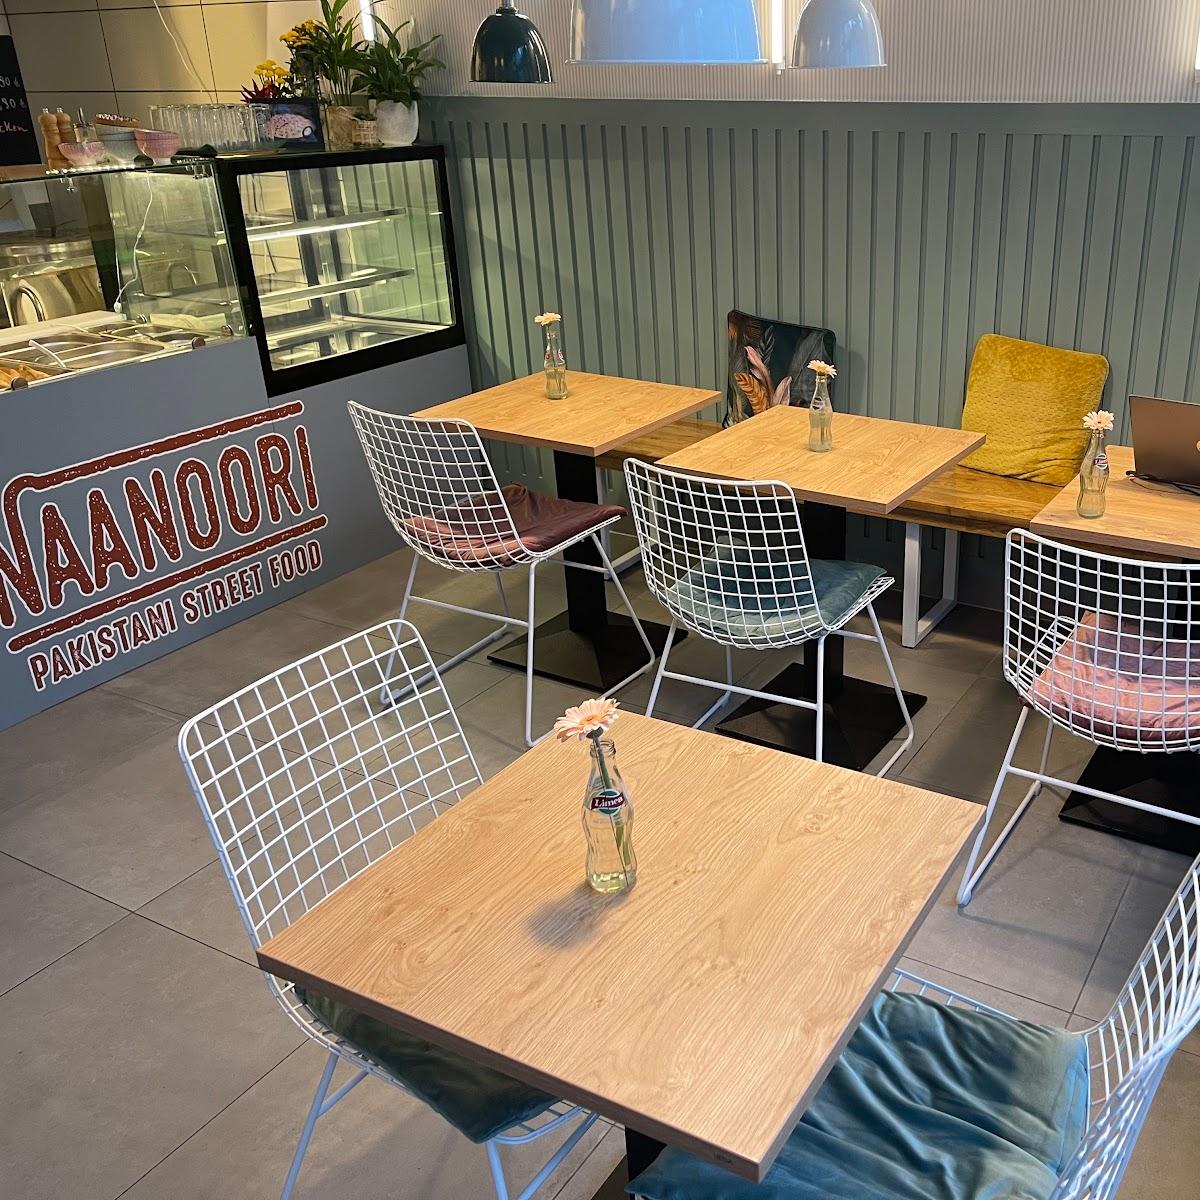 Restaurant "Naanoori" in Frankfurt am Main